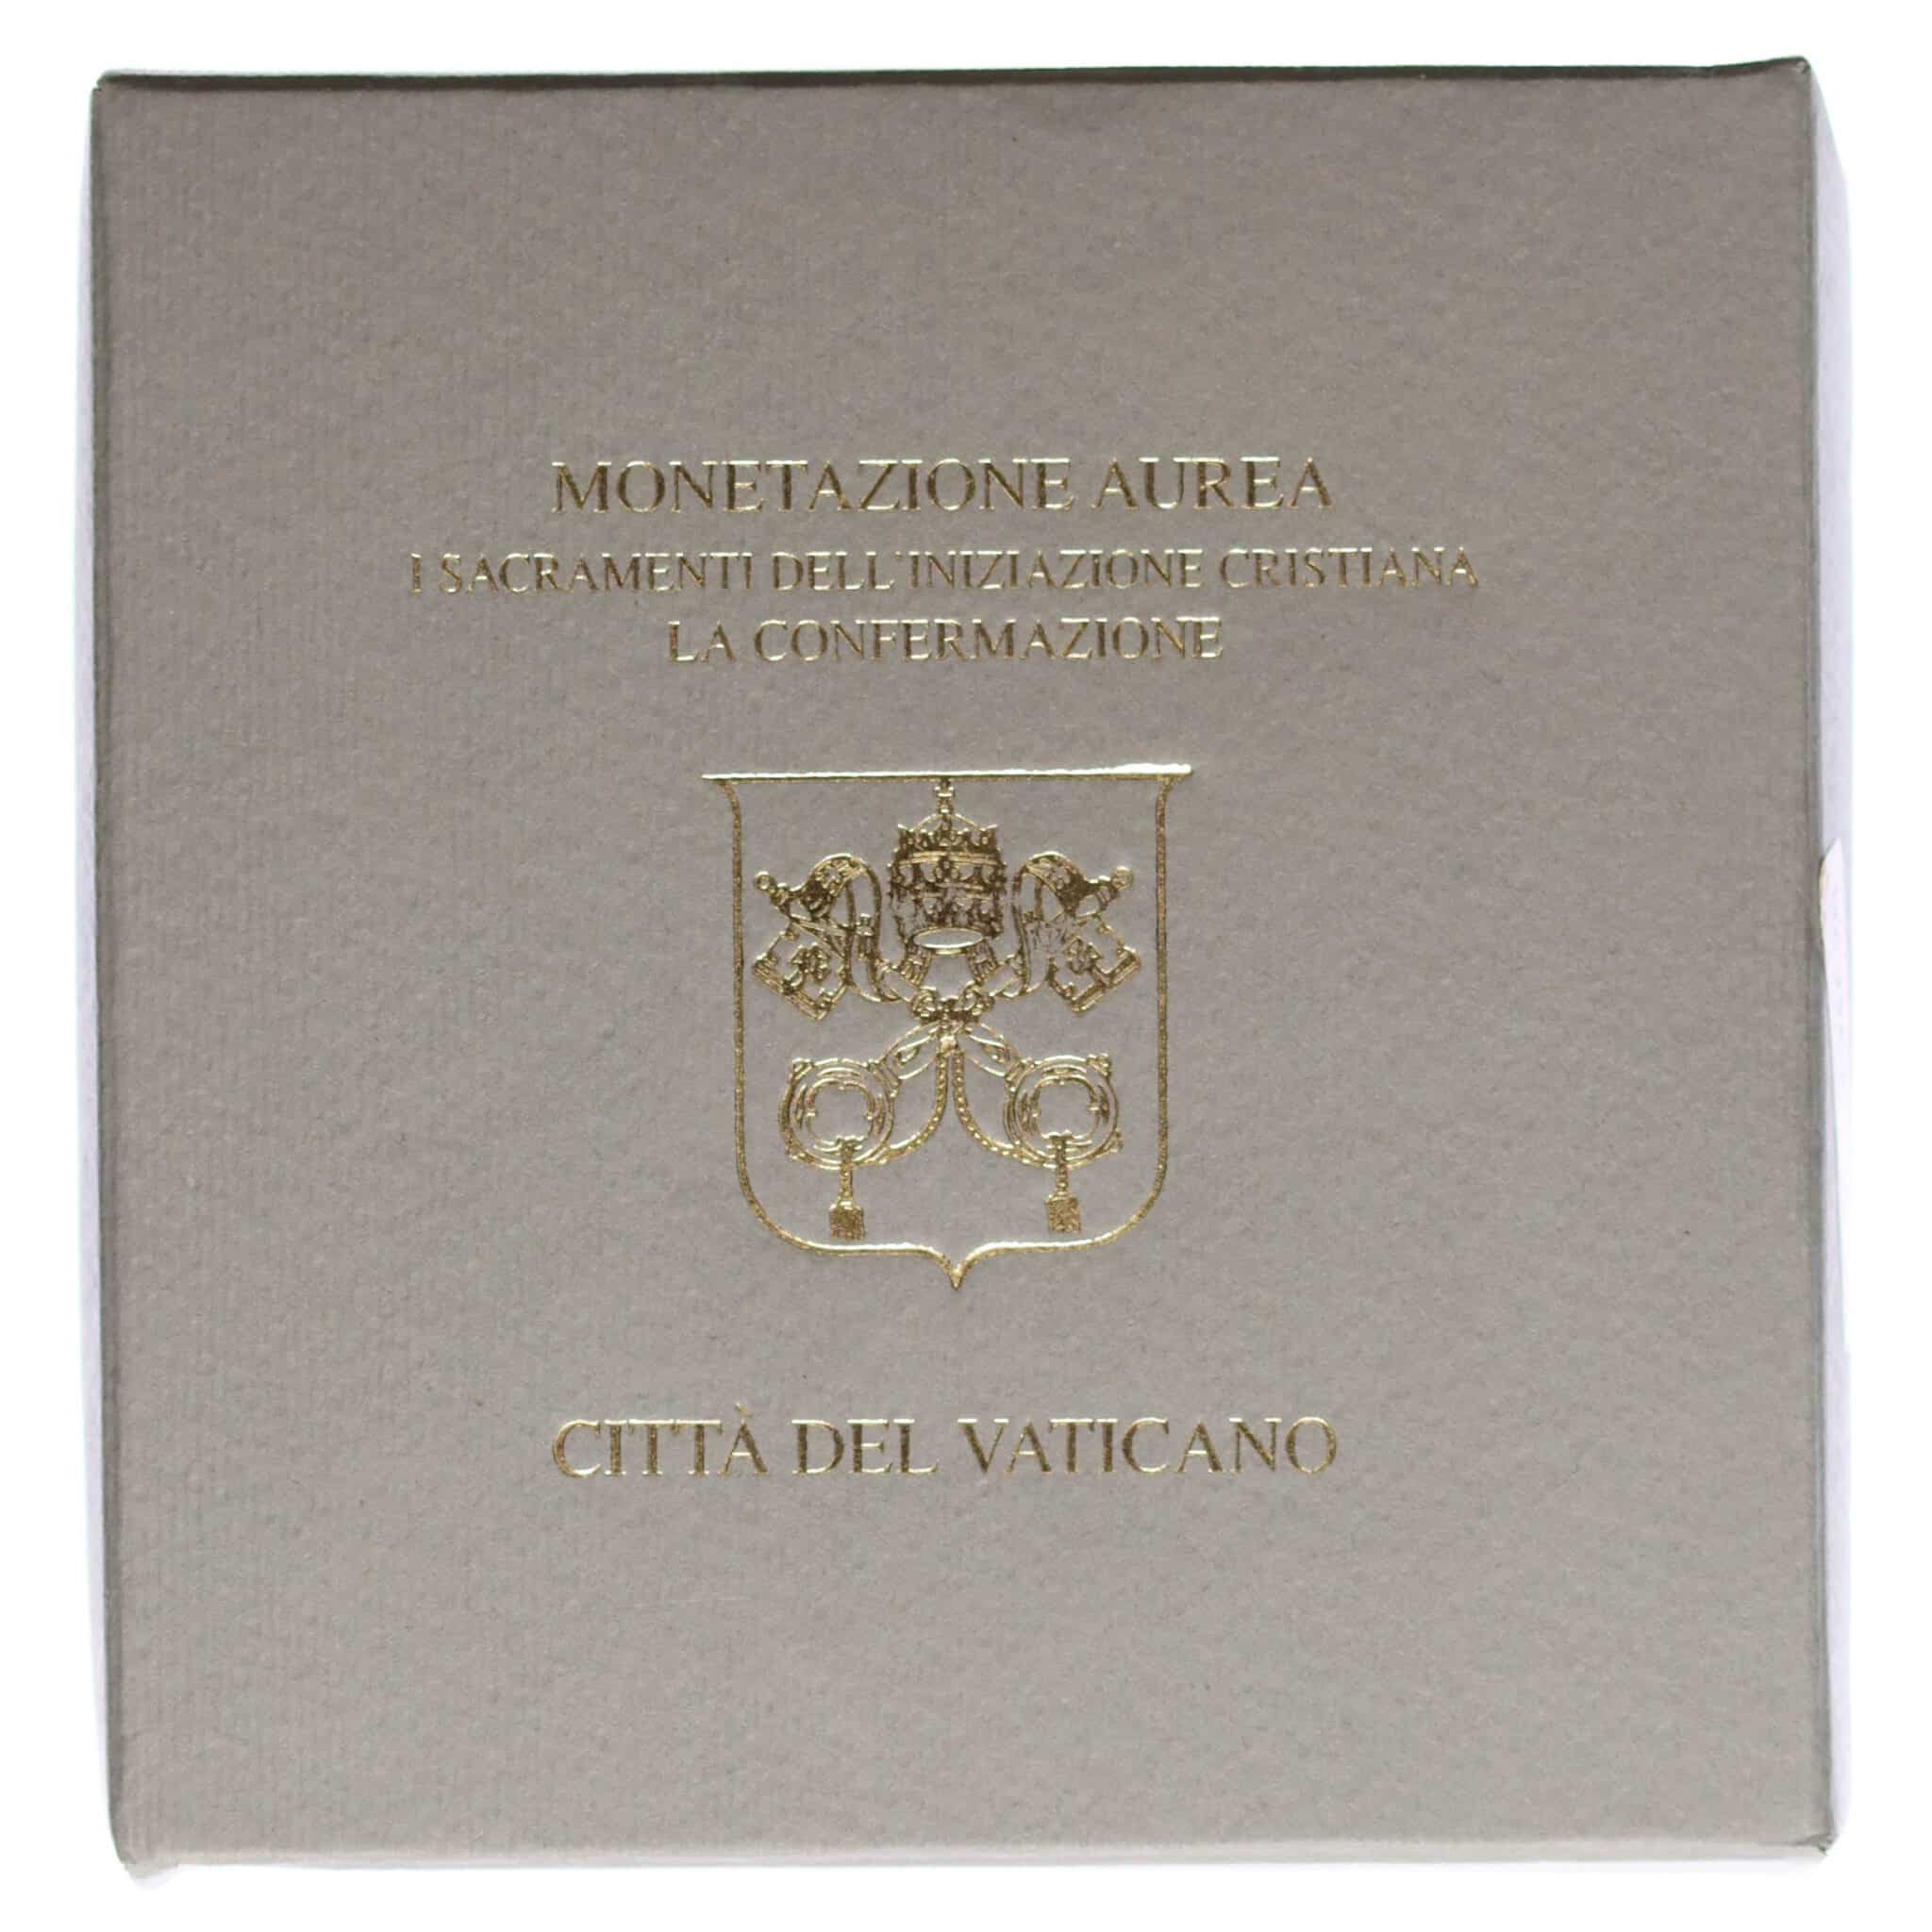 vatikan - Vatikan Benedikt XVI. 50 Euro 2006